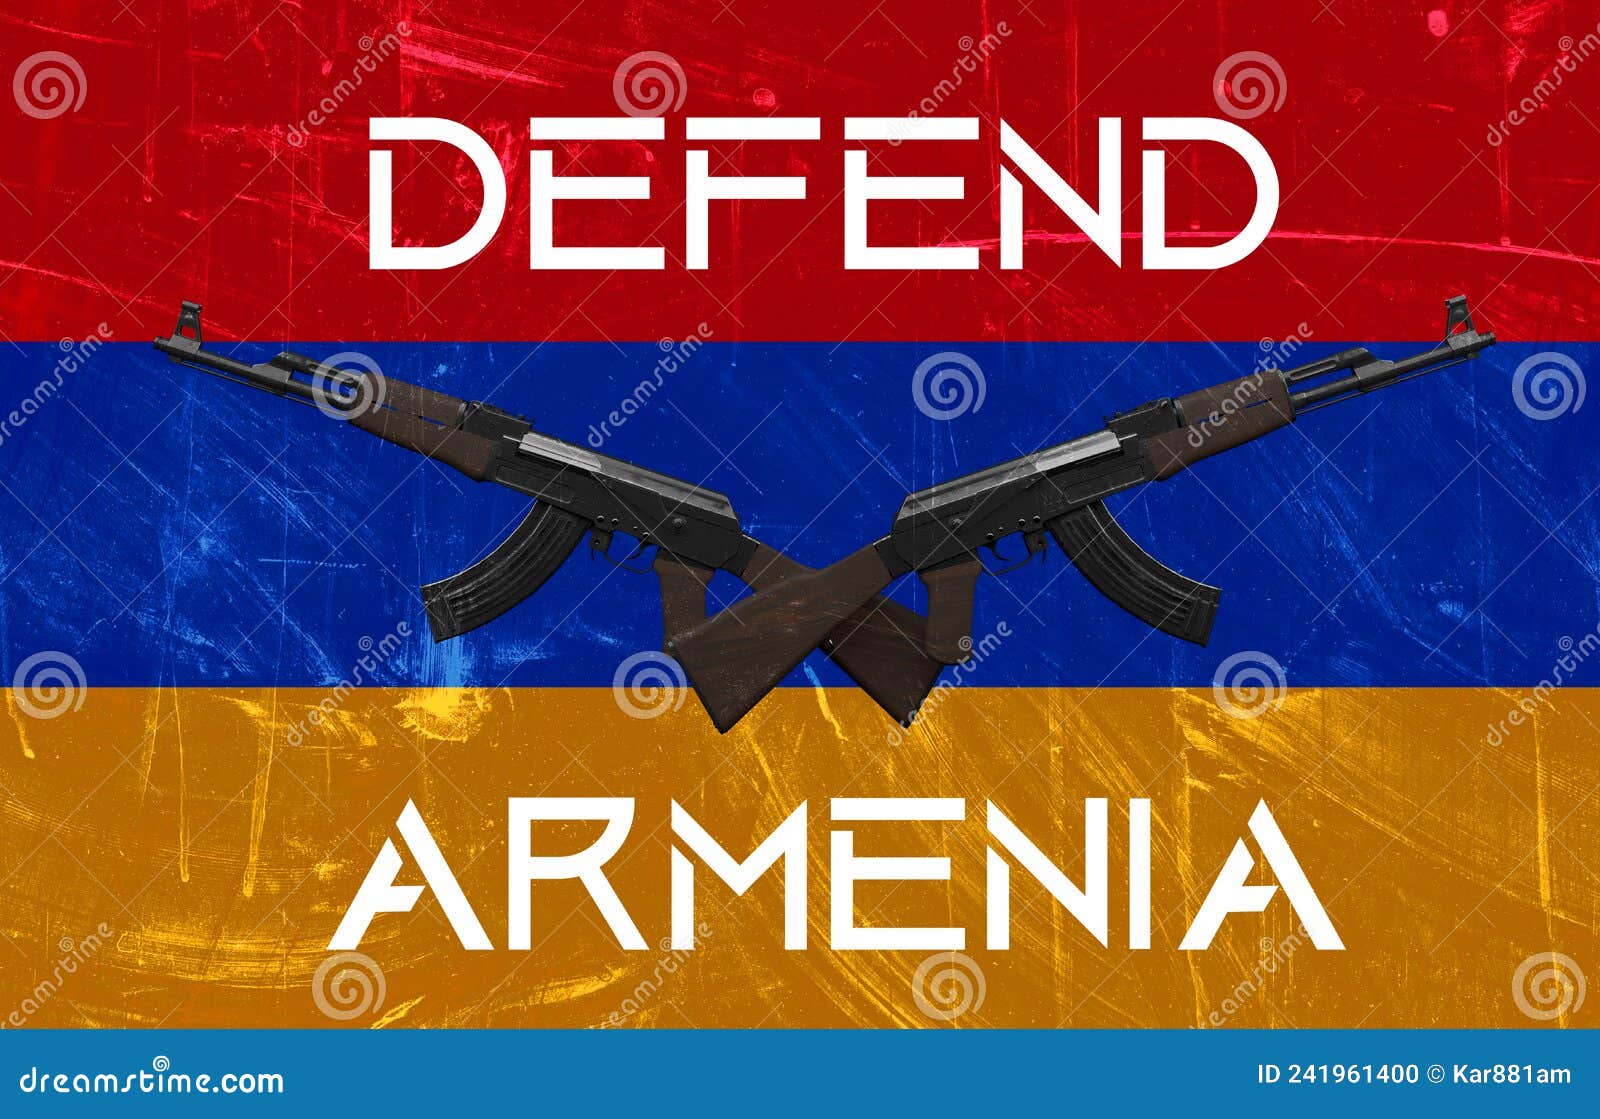 Defend Armenia Wallpaper, AK-47 and Flag Armenia Stock Illustration -  Illustration of defender, ally: 241961400